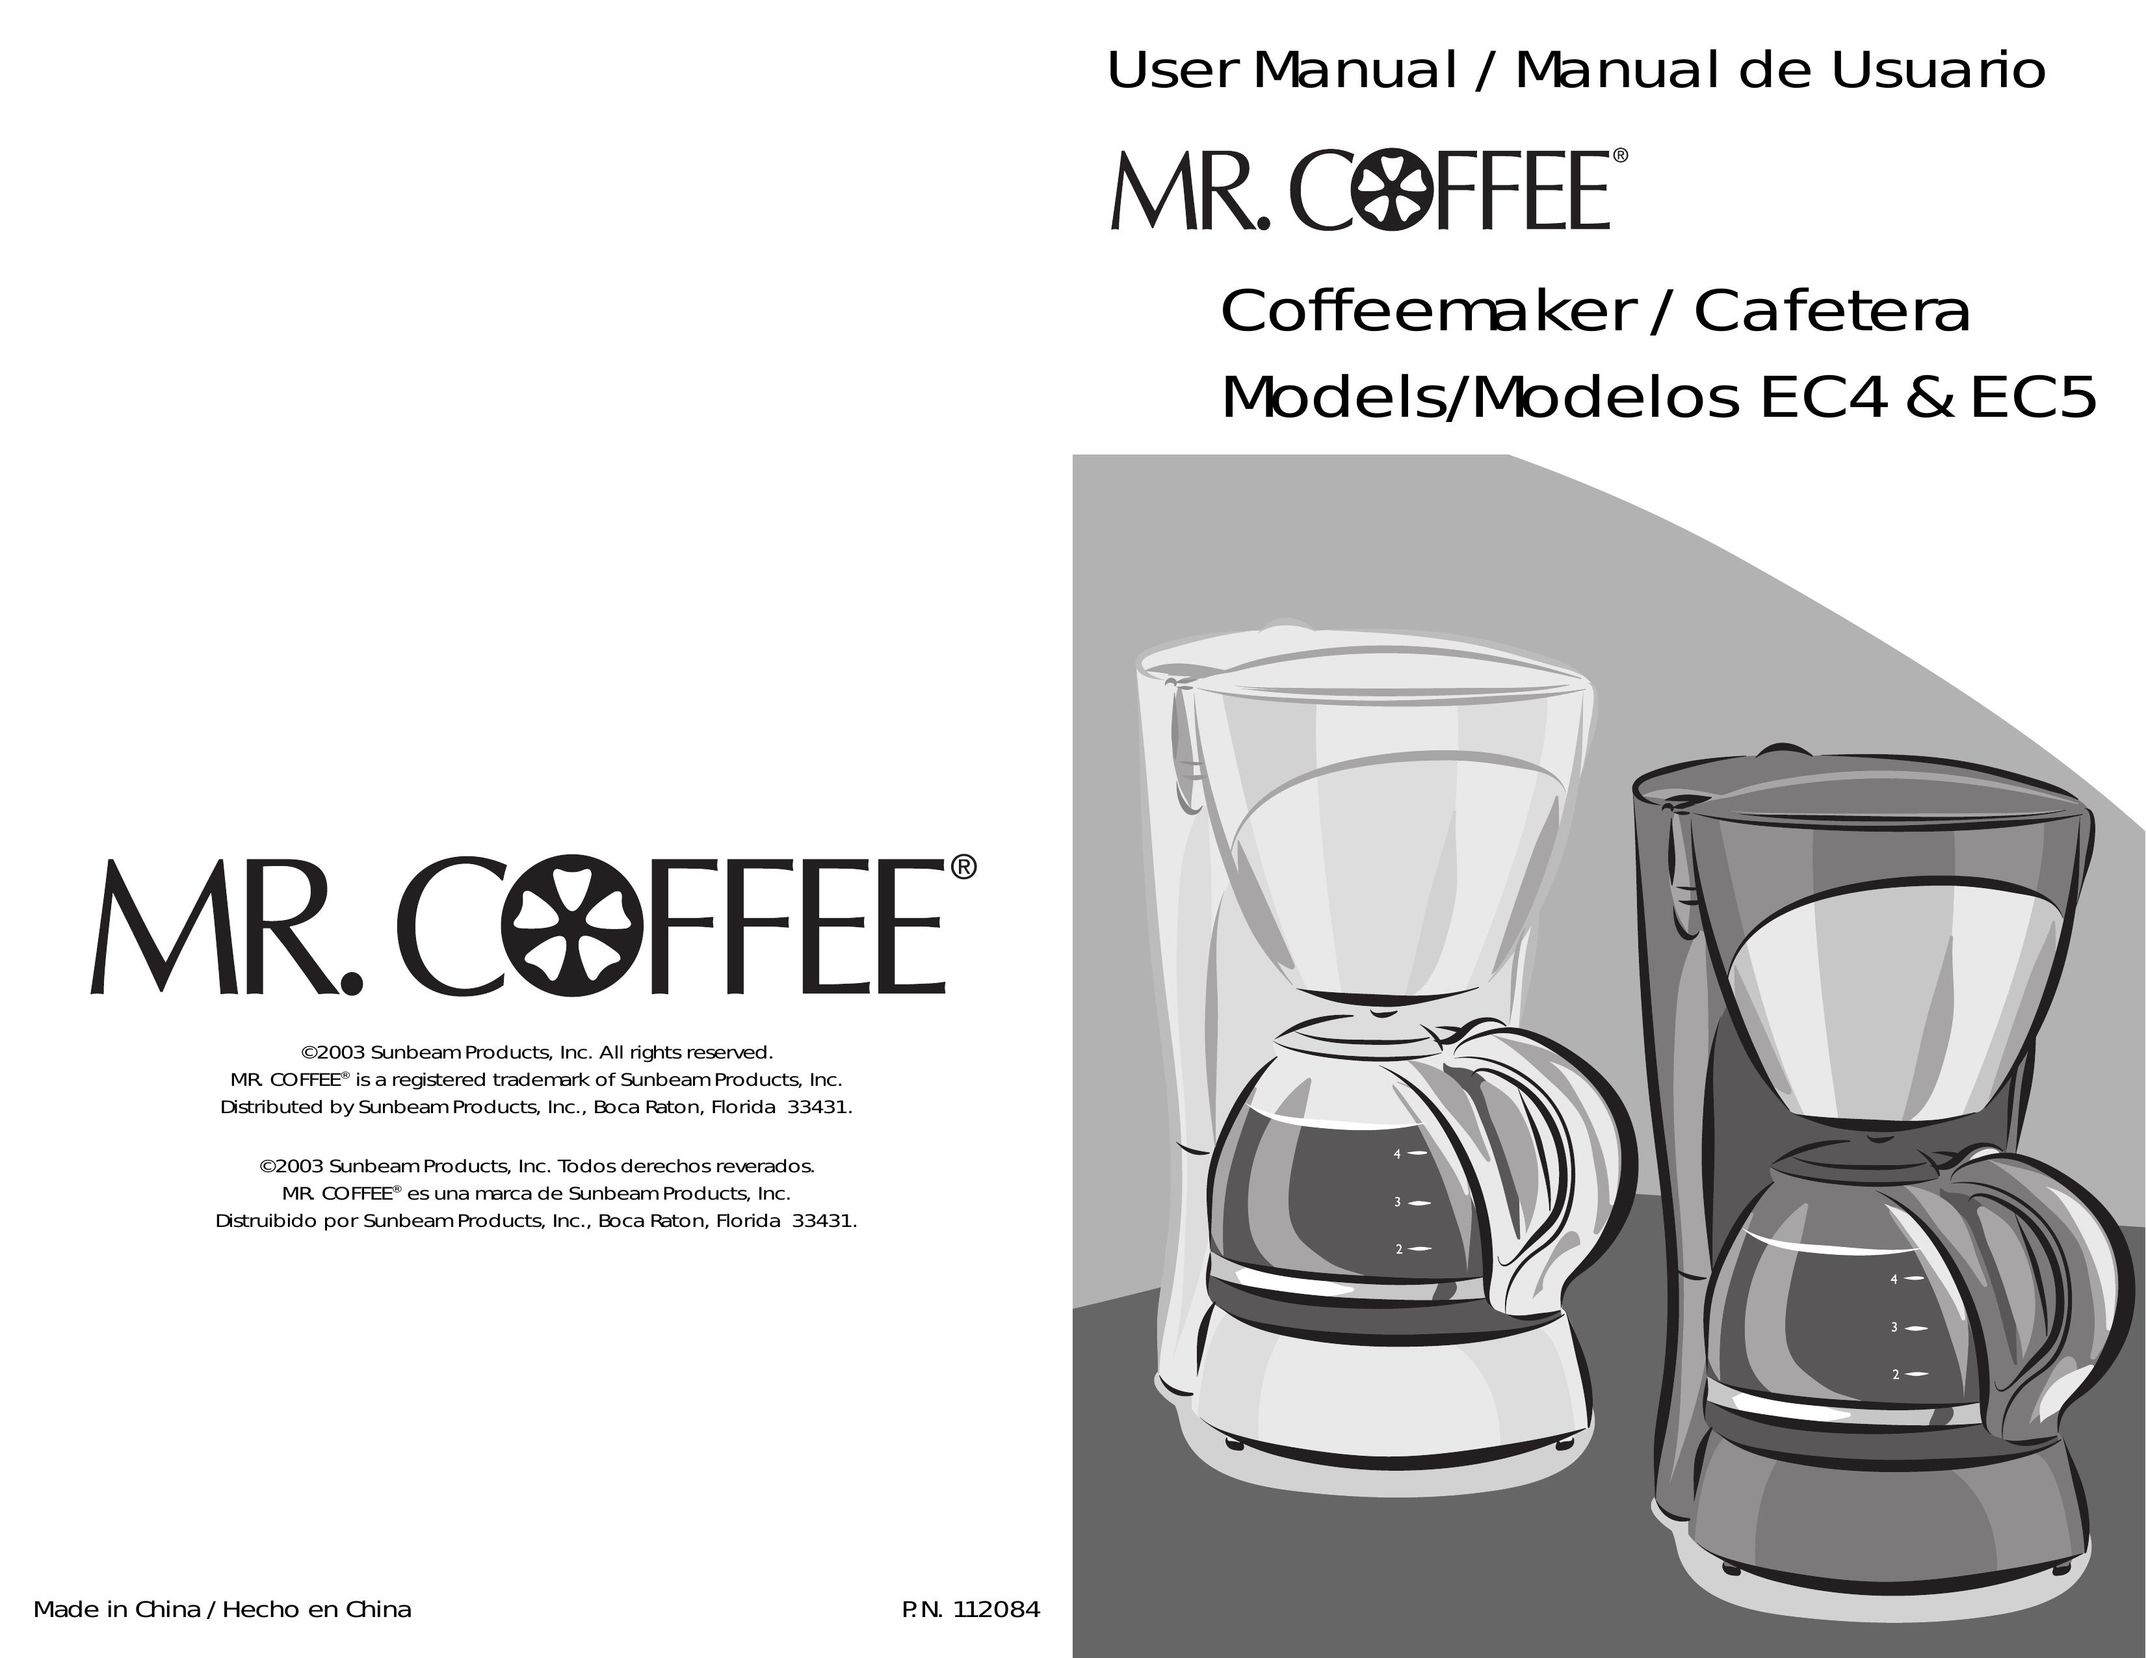 Mr. Coffee EC5 Coffeemaker User Manual